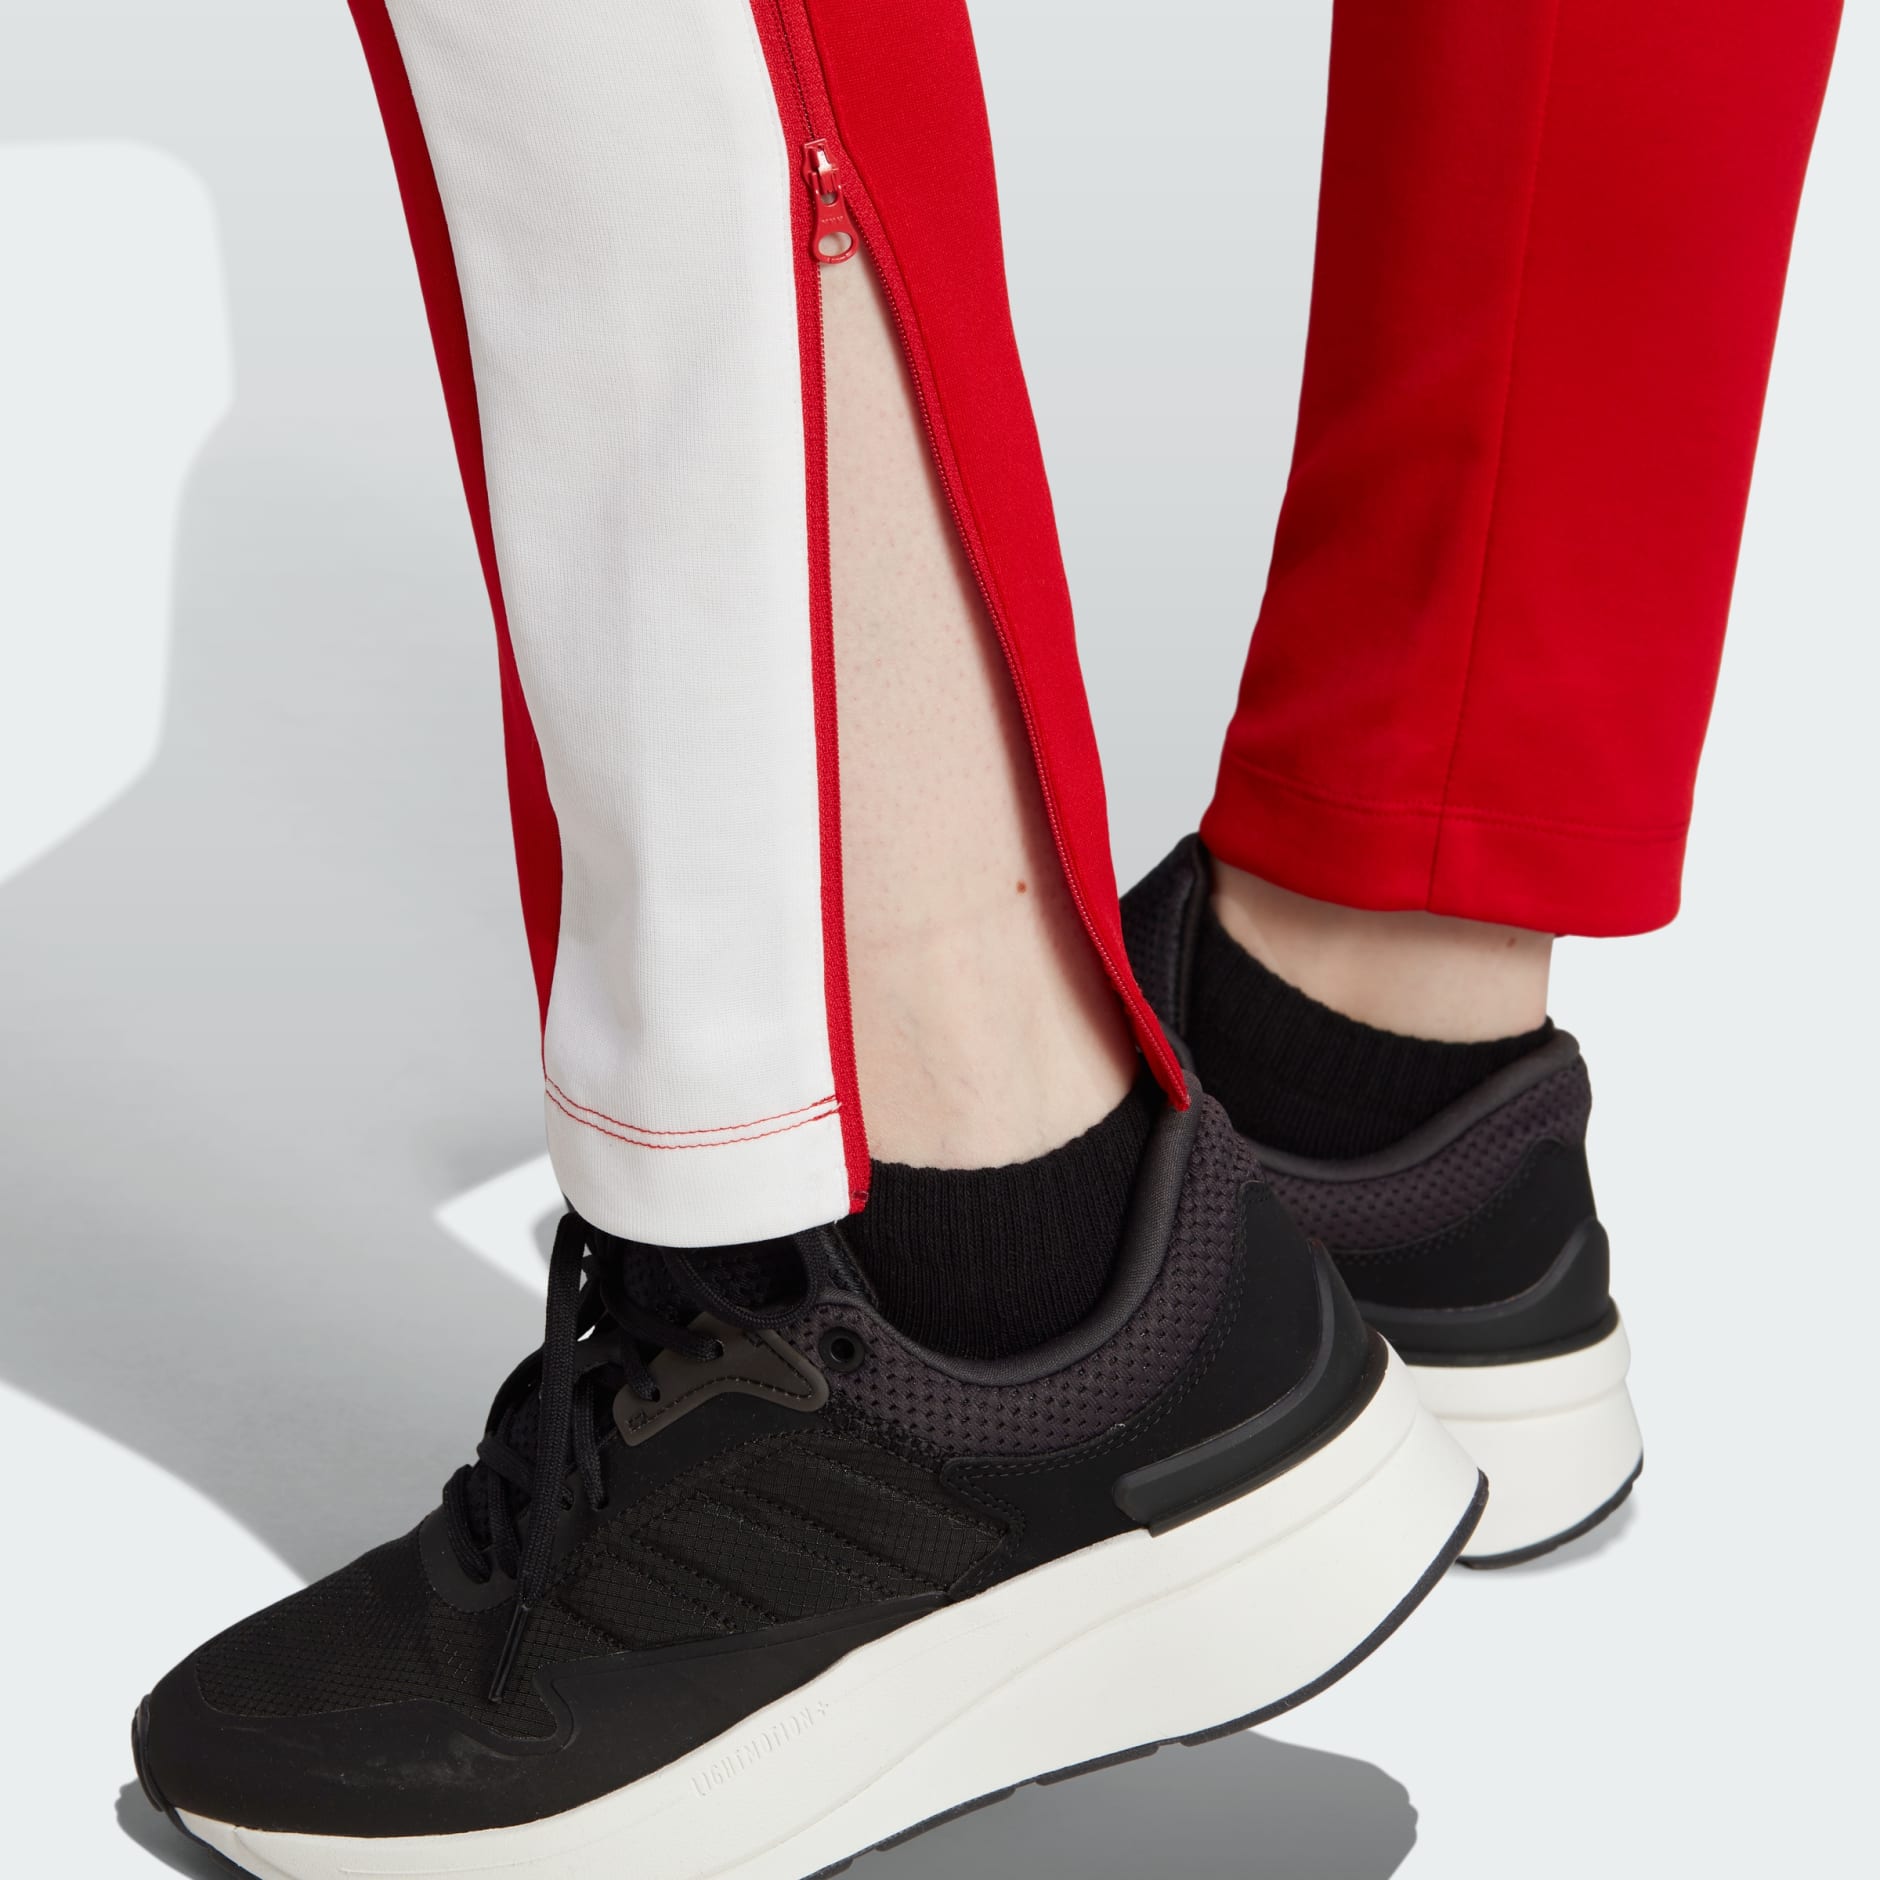 adidas Tiro Track Pants - Red